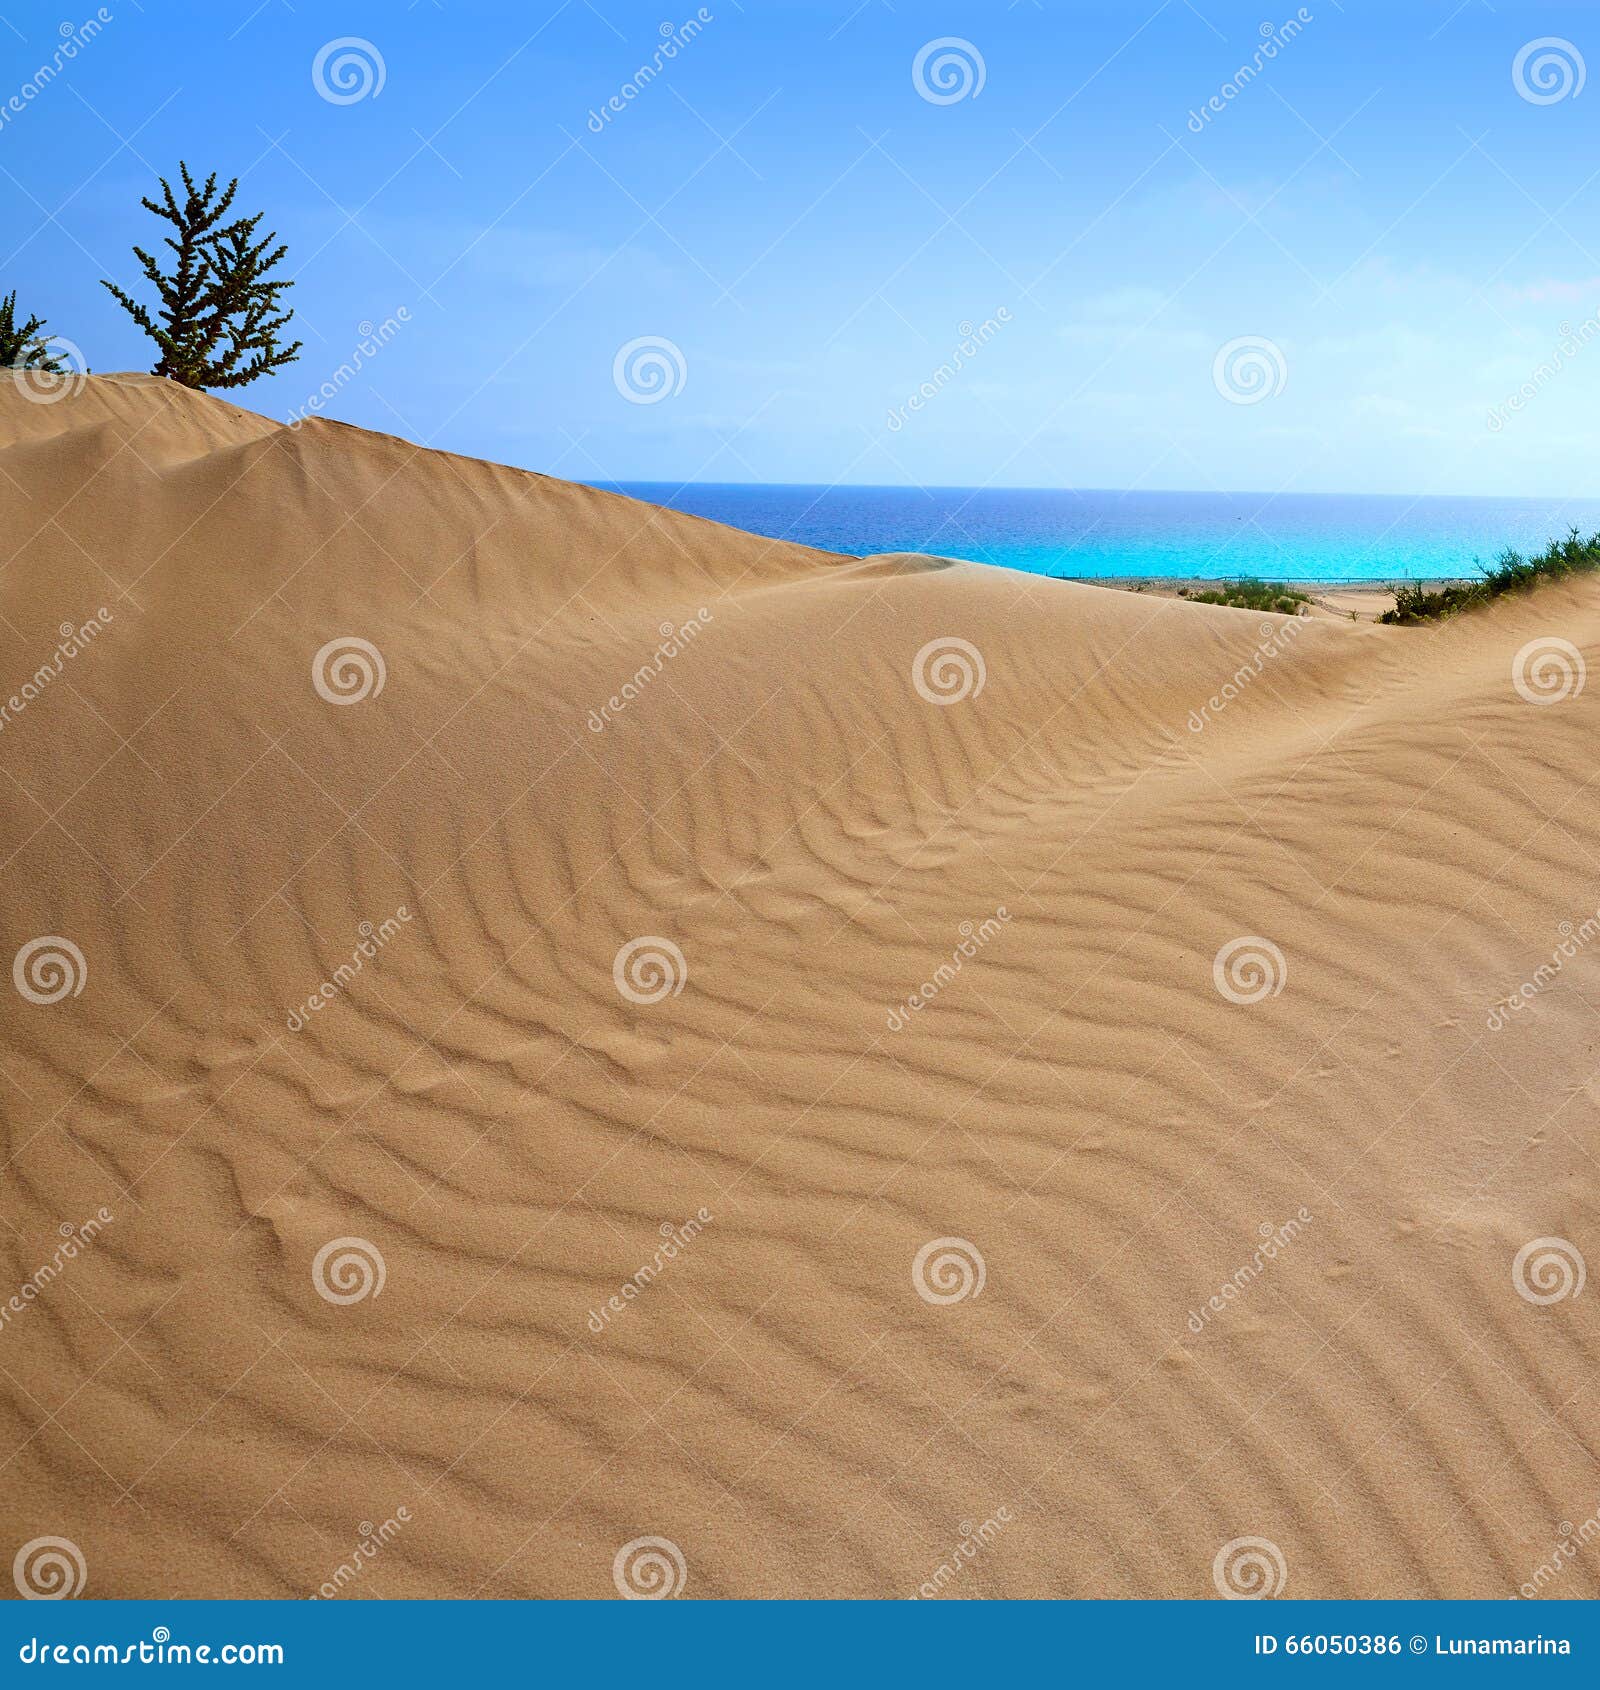 corralejo dunes fuerteventura island desert